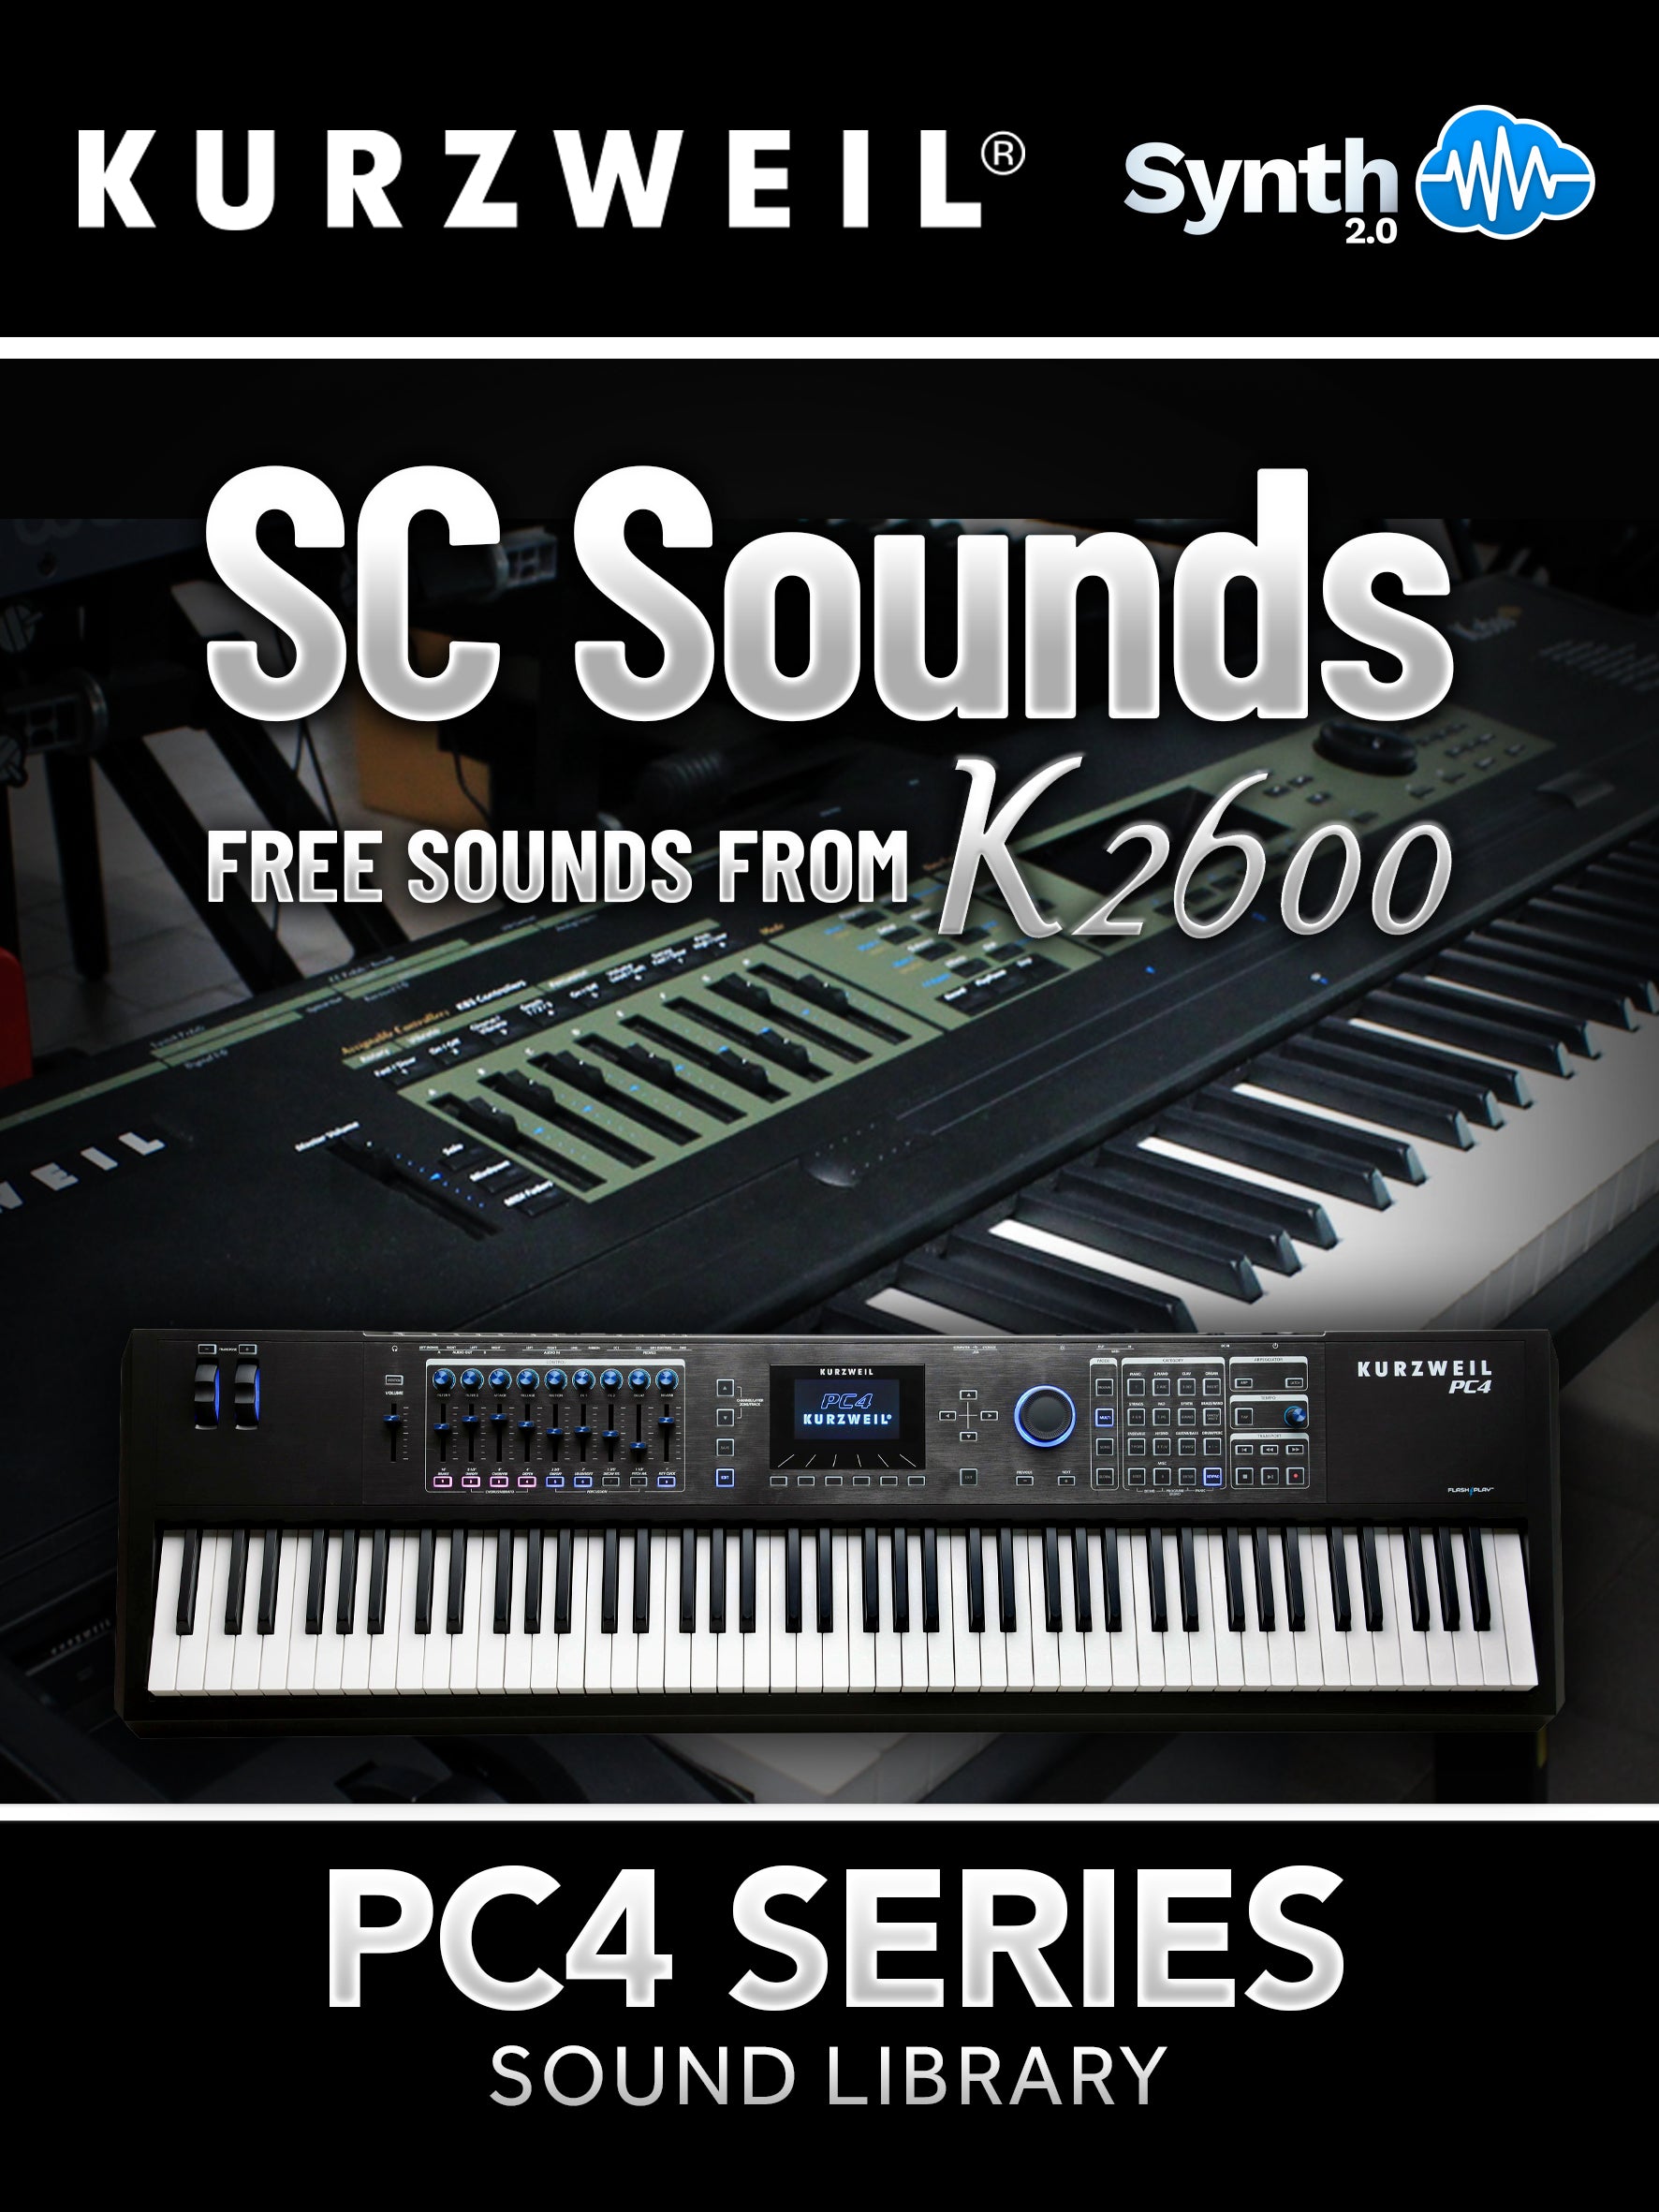 PC4026 - SC Sounds Free Sound From K2600 - Kurzweil PC4 Series ( 40 presets )